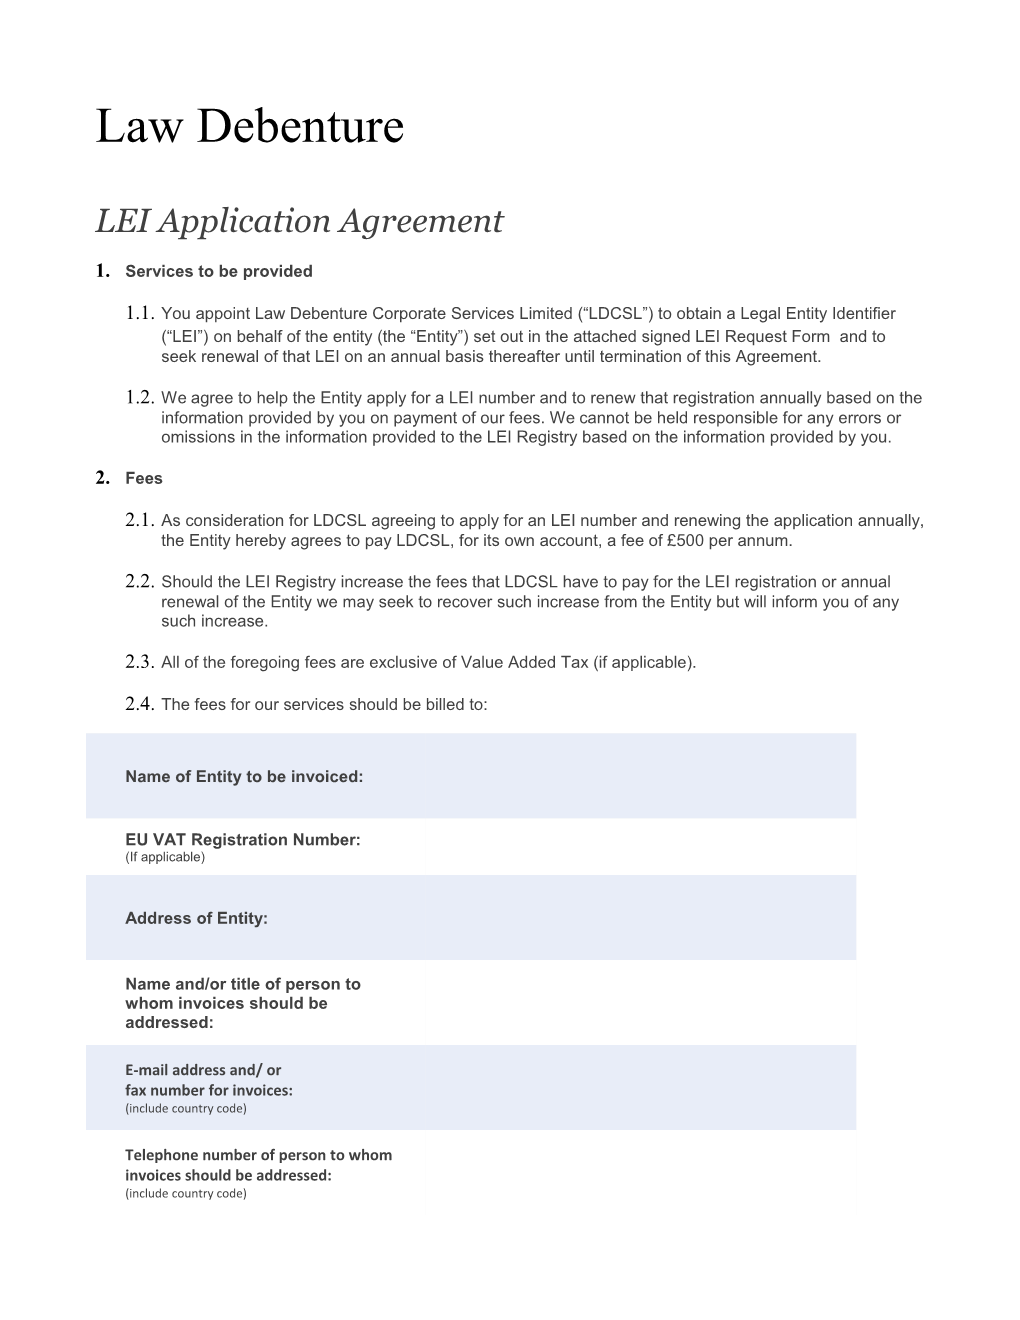 LEI Application Agreement